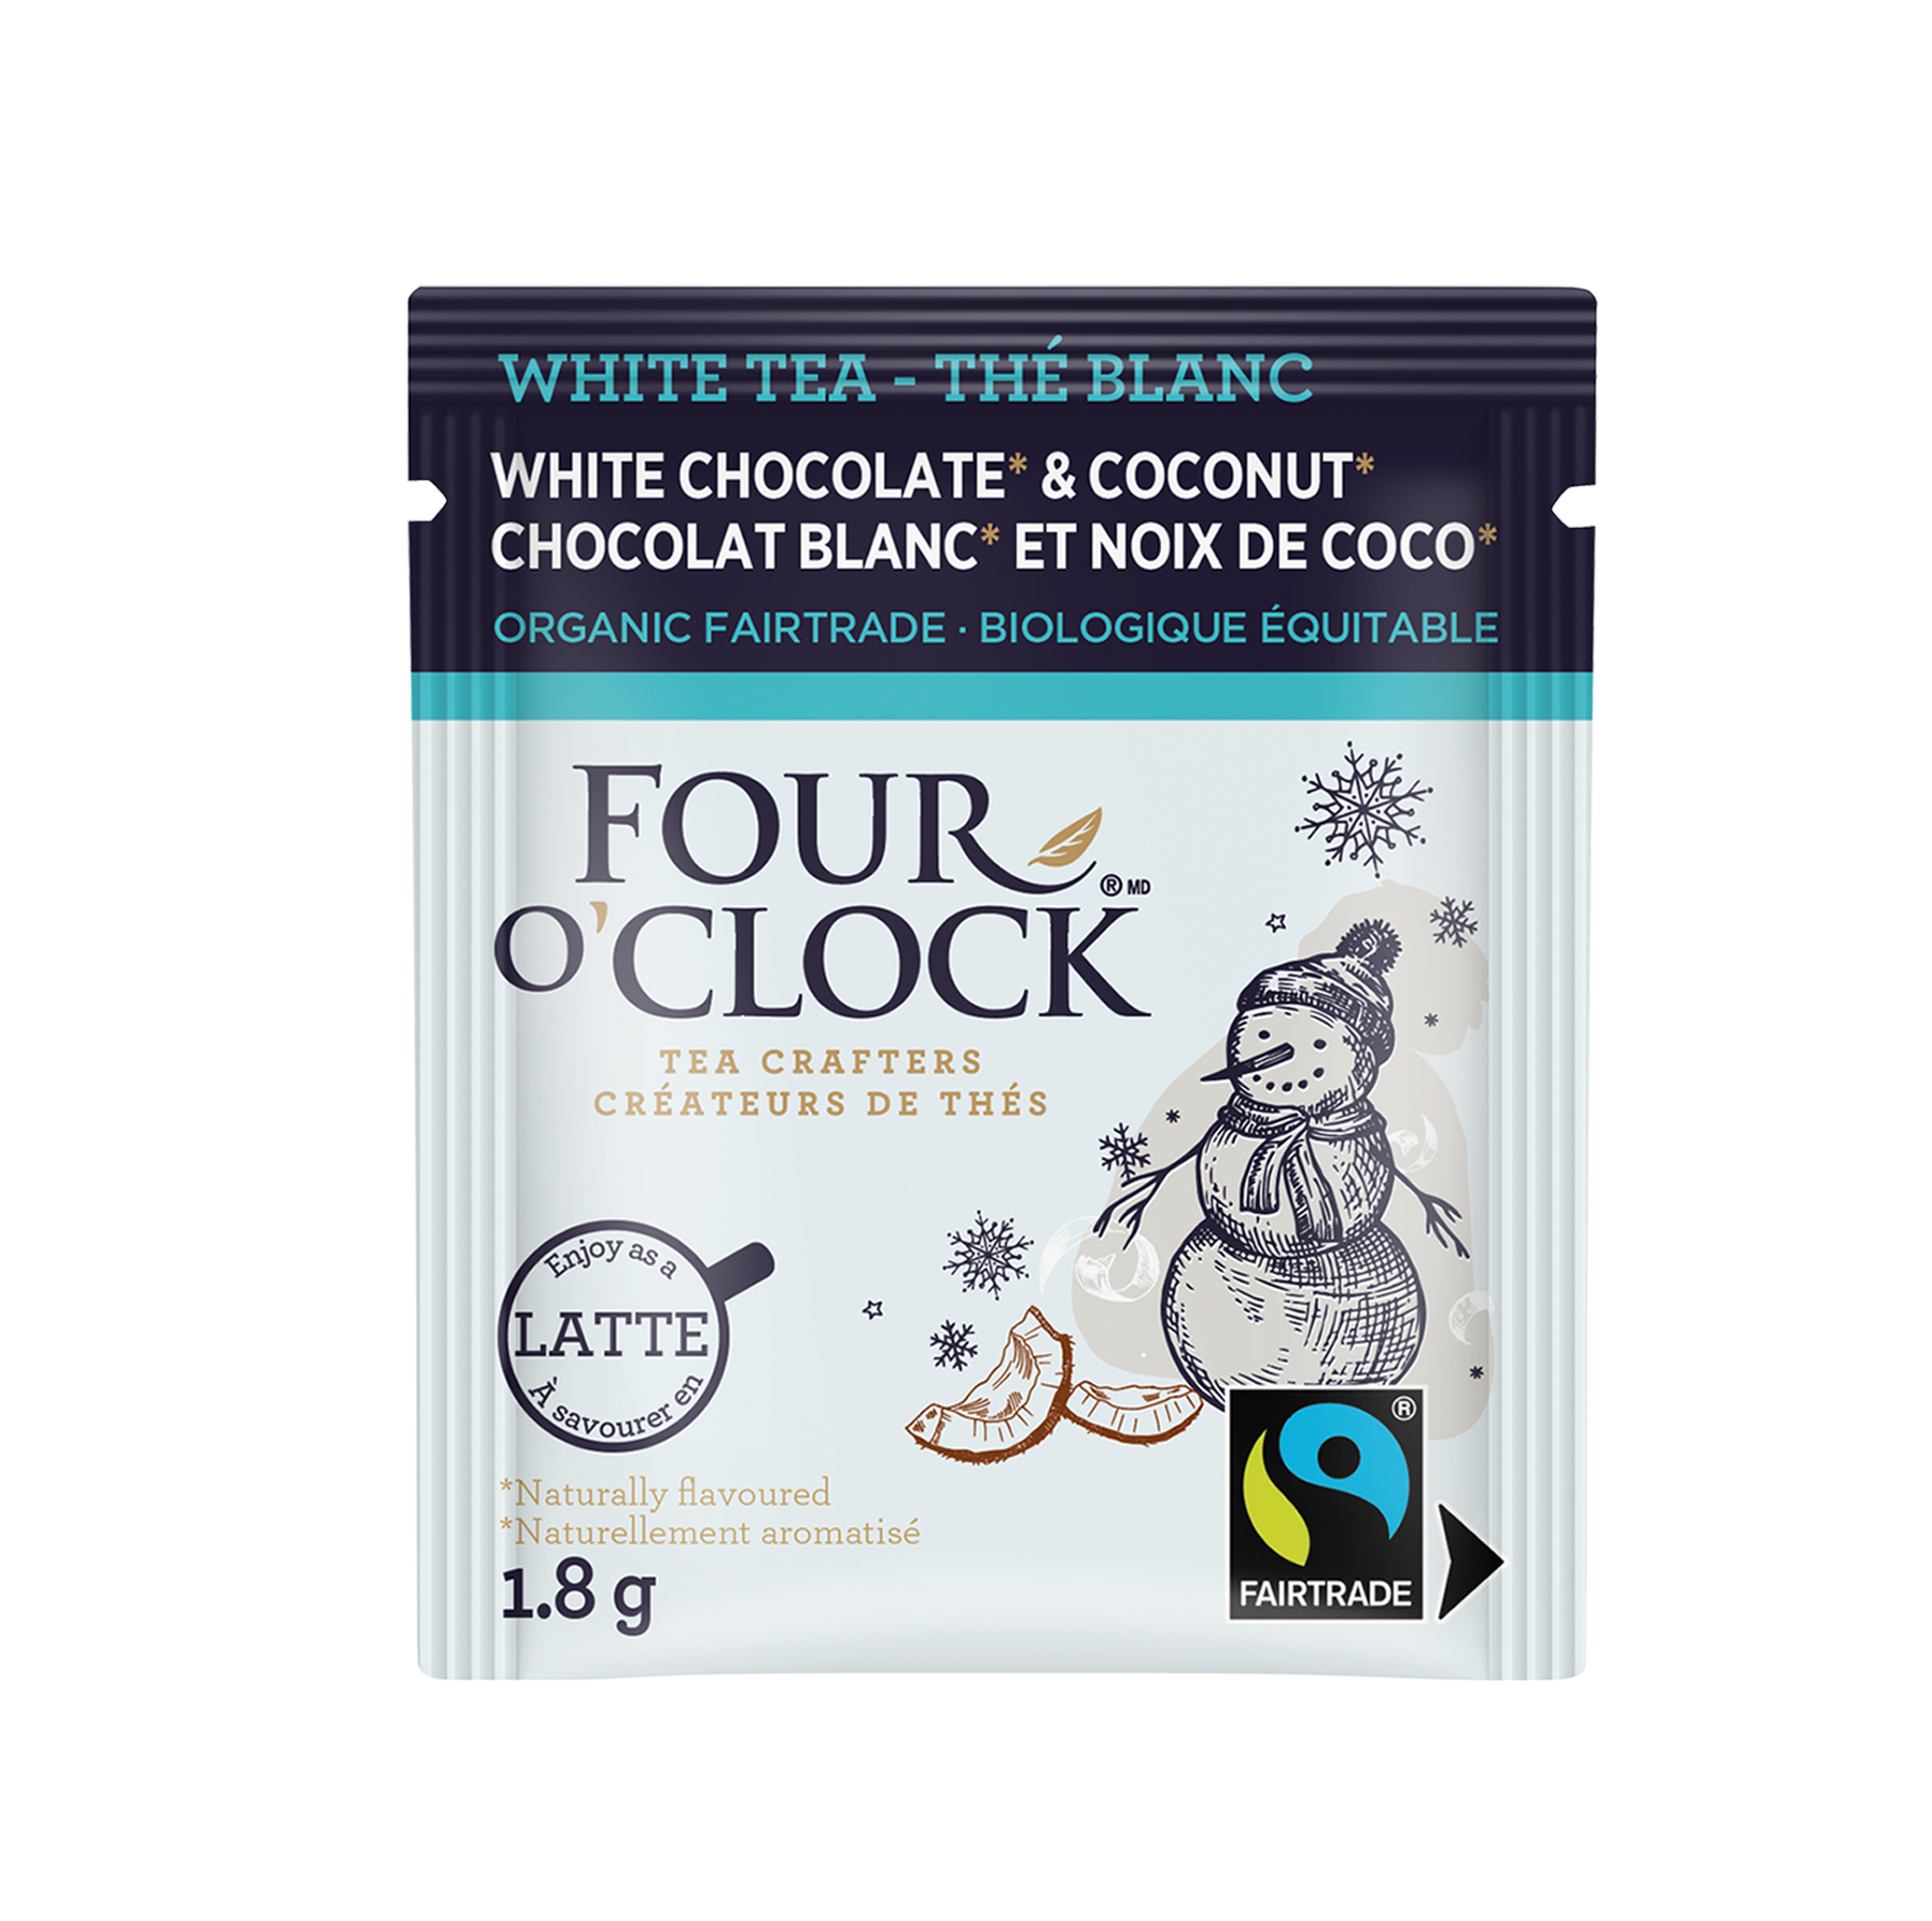 White Chocolate & Coconut Organic Fairtrade White Tea